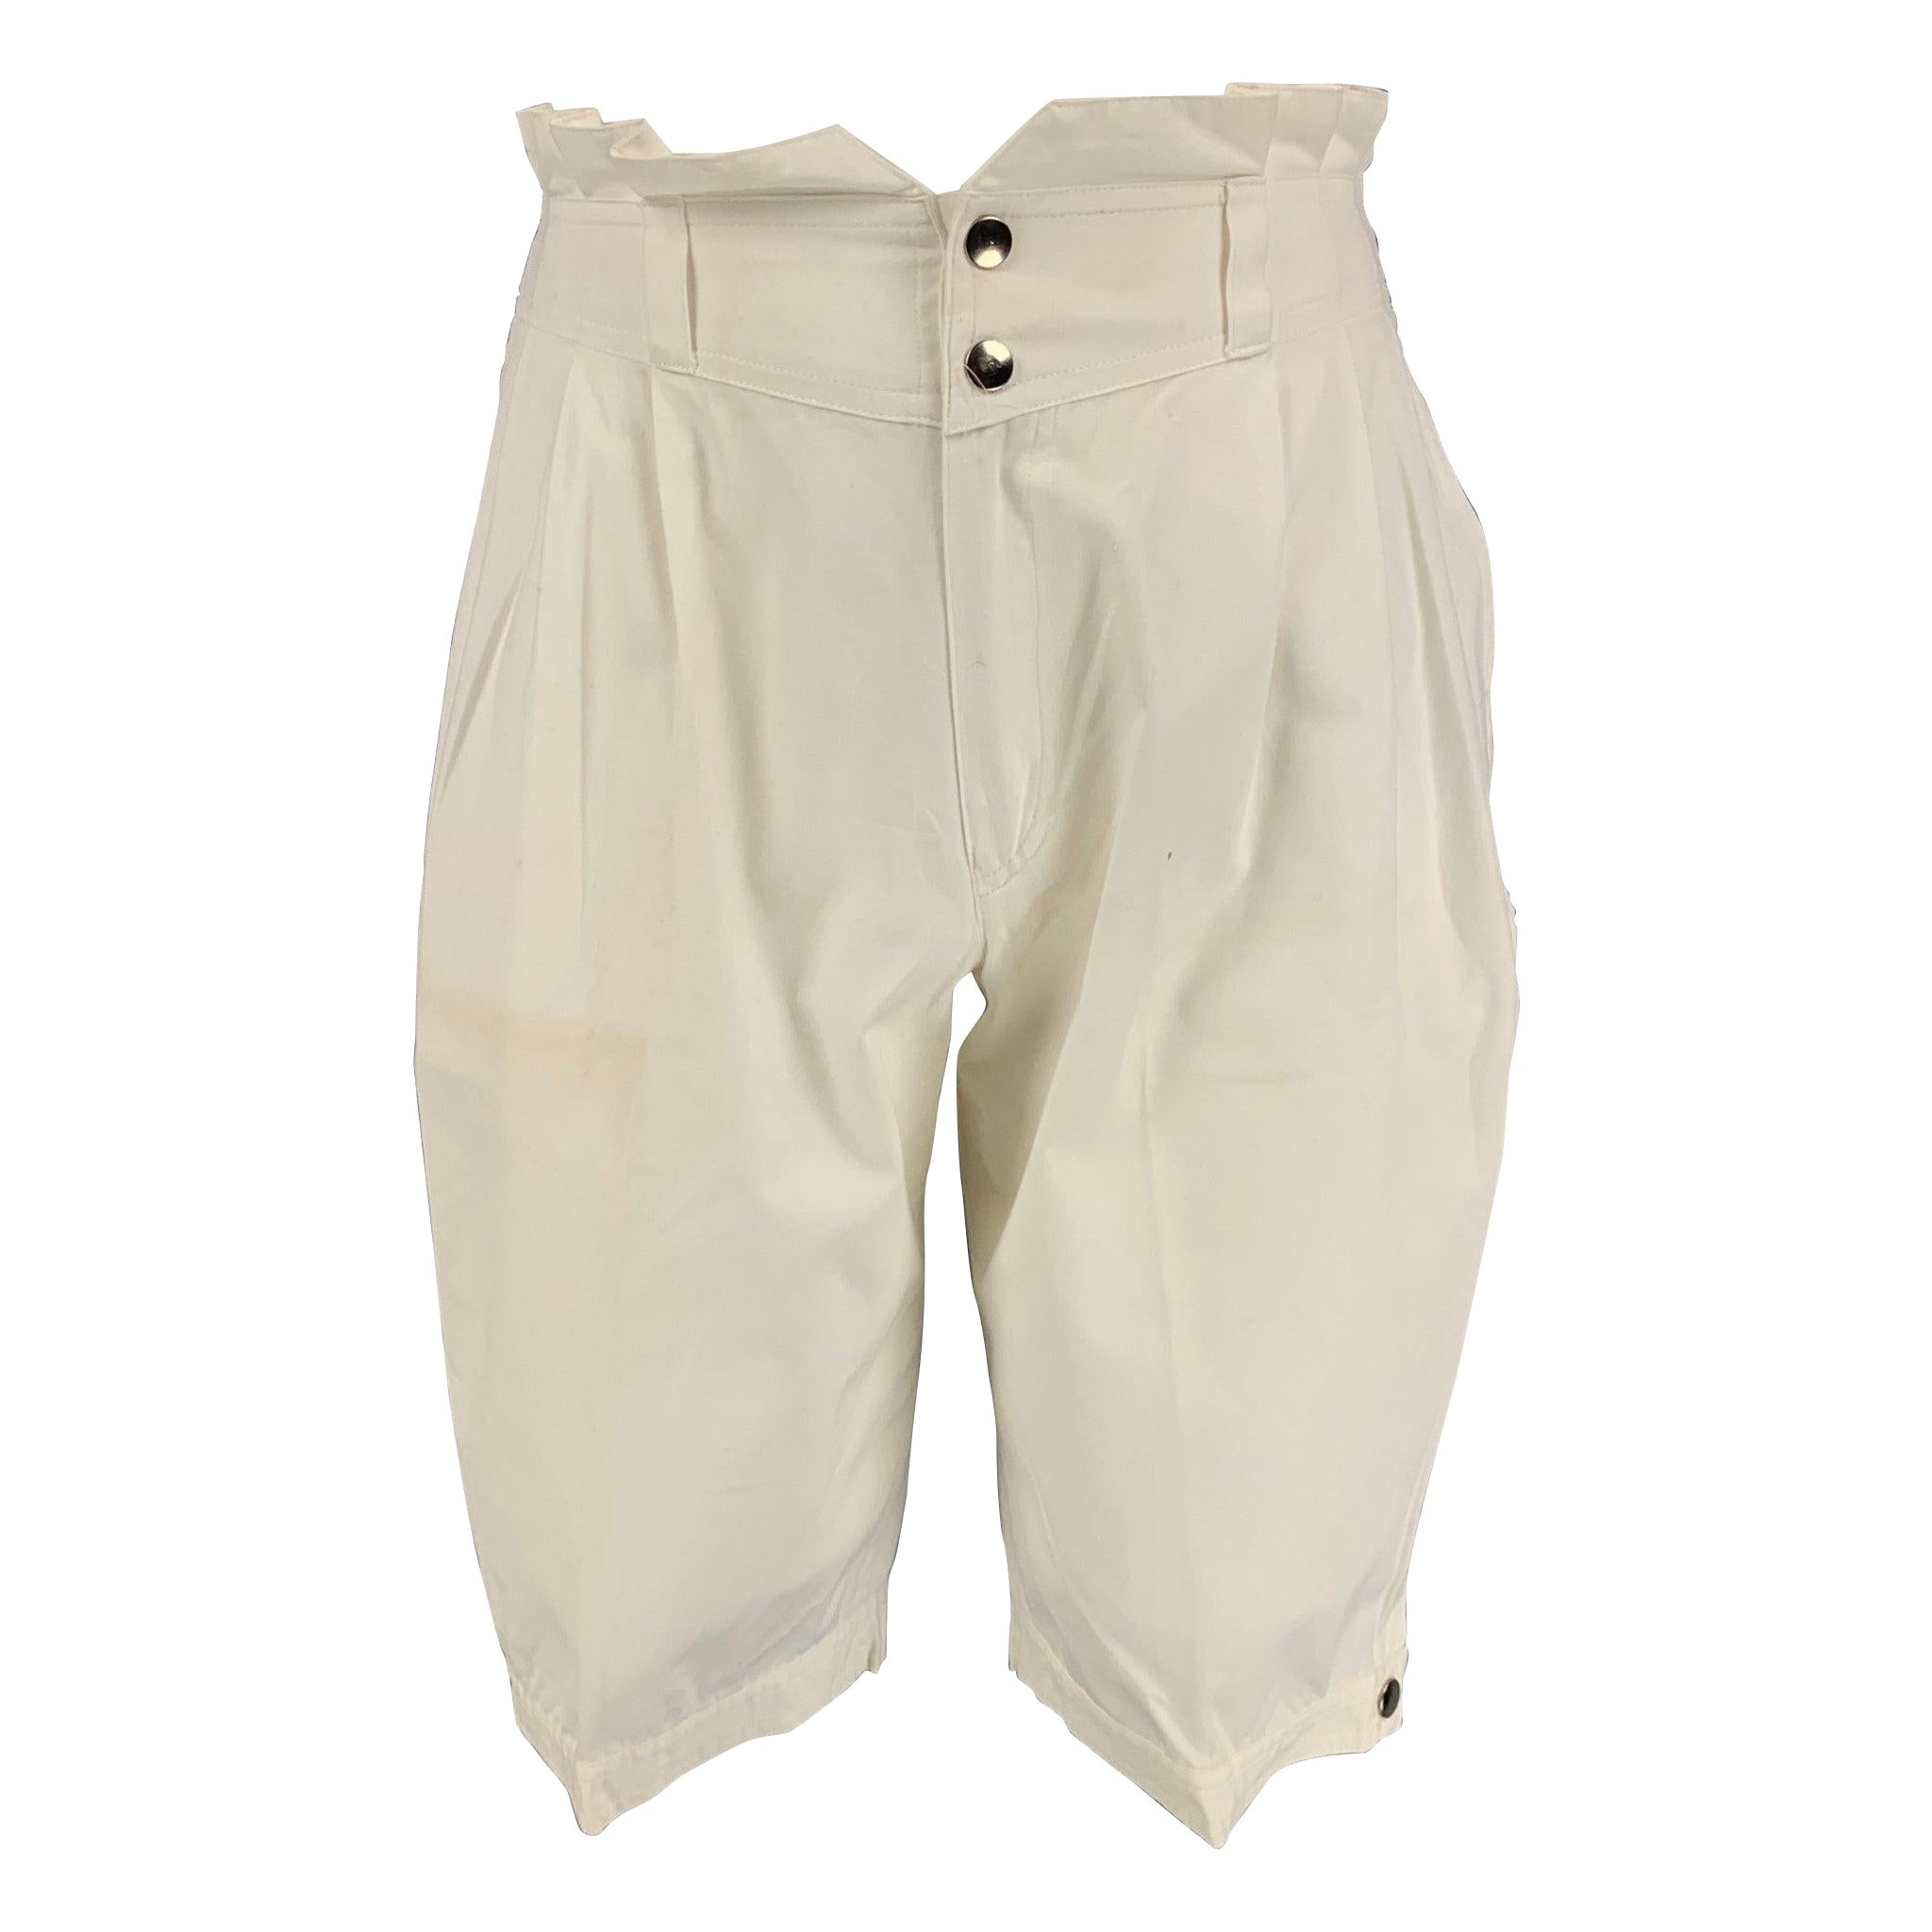 Vintage KANSAI YAMAMOTO Size 28 White Pleated Cotton High Waisted Shorts For Sale